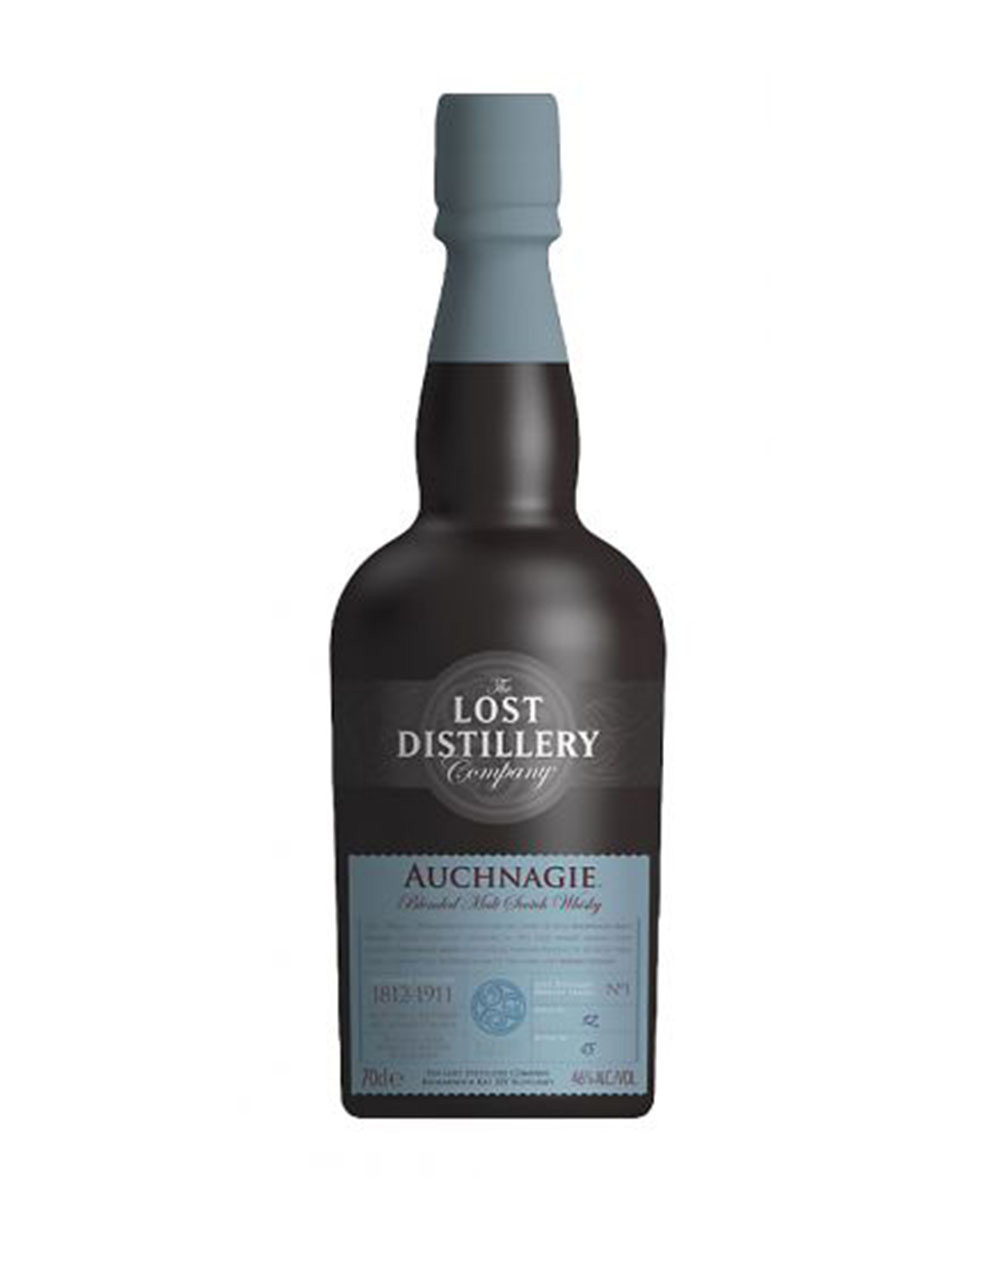 The Lost Distillery Auchnagie Blended Malt Scotch Whisky